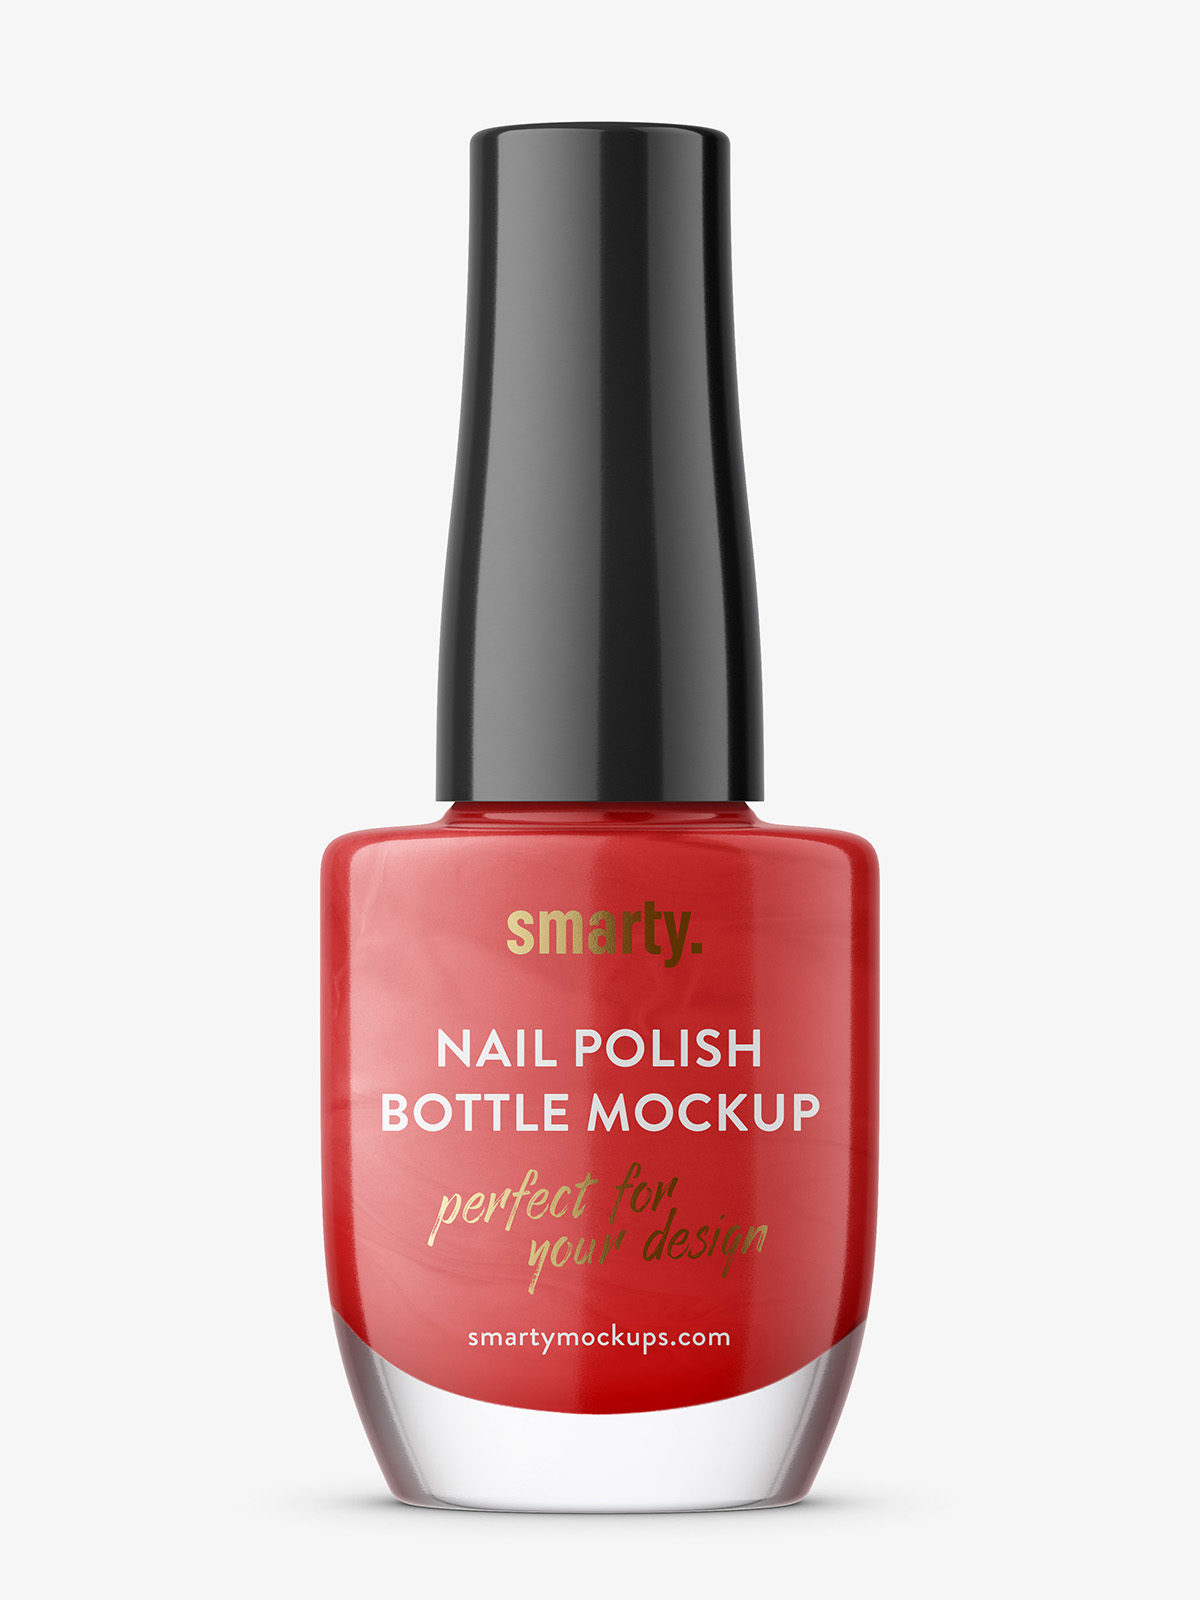 Download Nail polish bottle mockup - Smarty Mockups